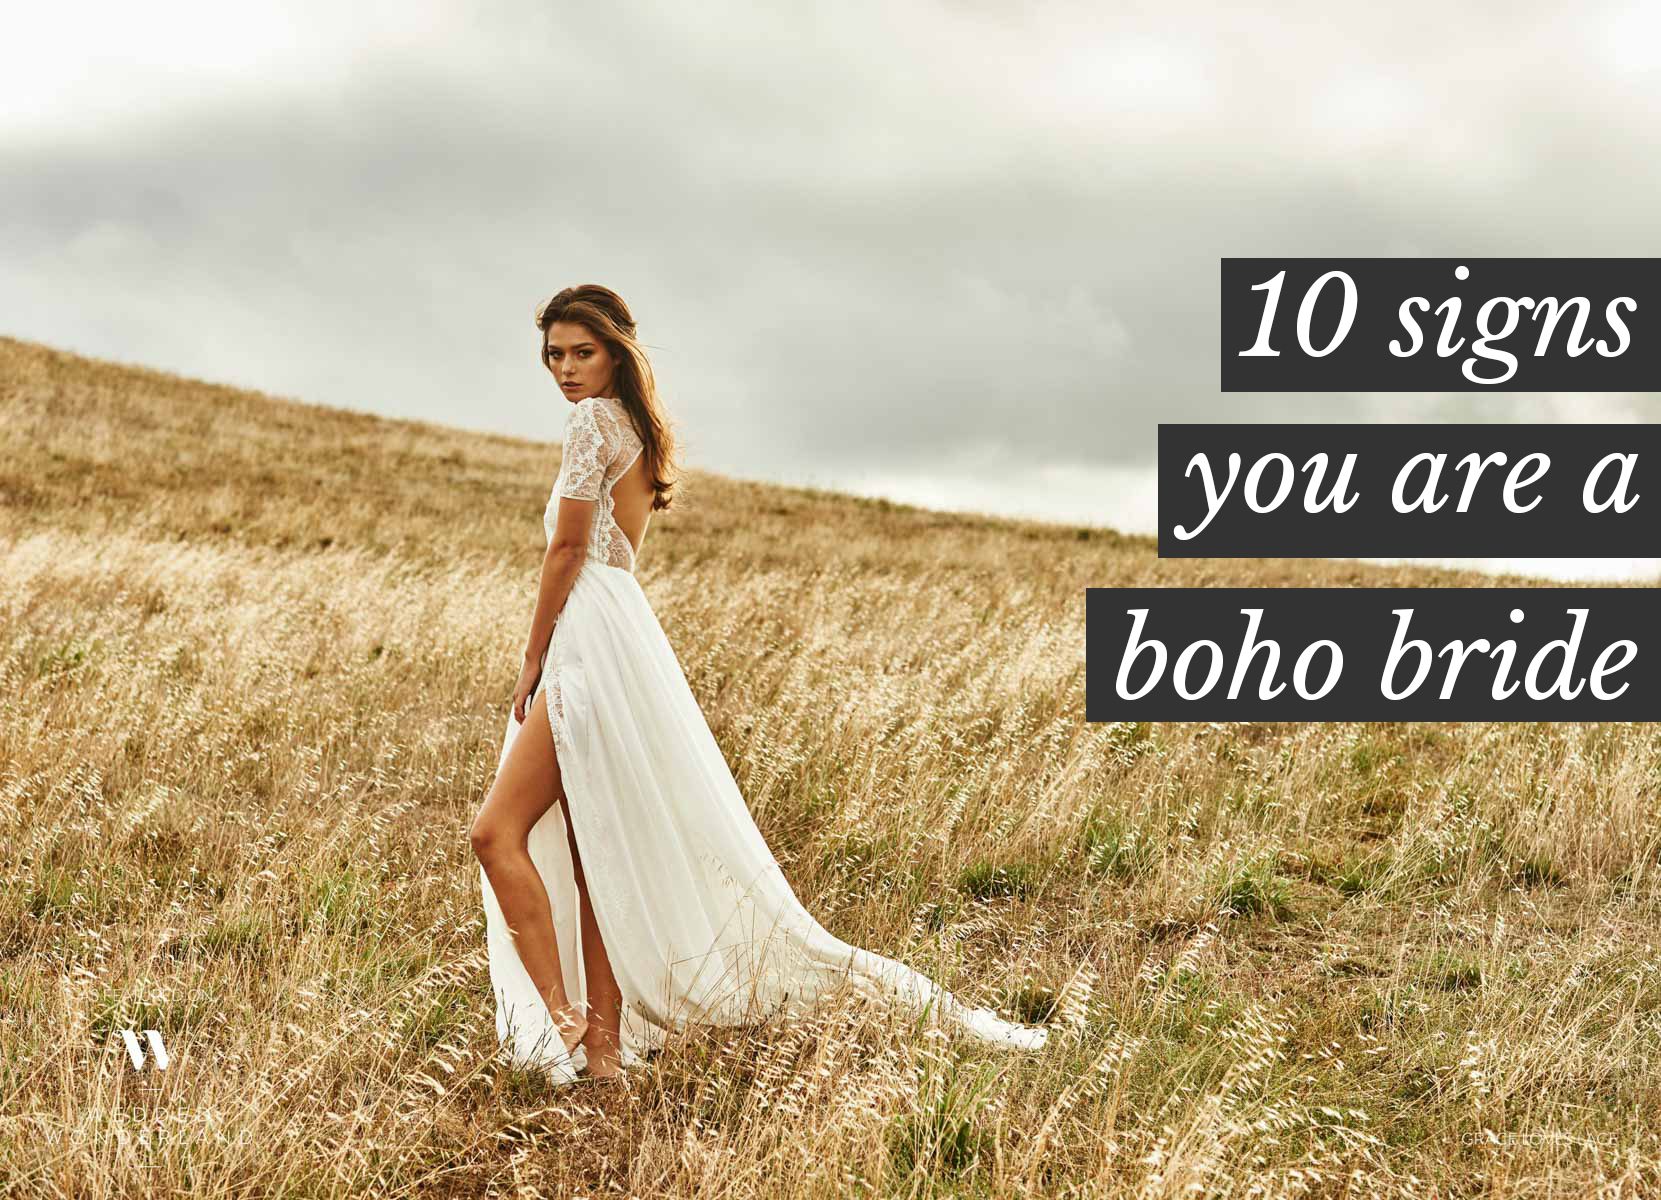 10 signs you are a boho bride